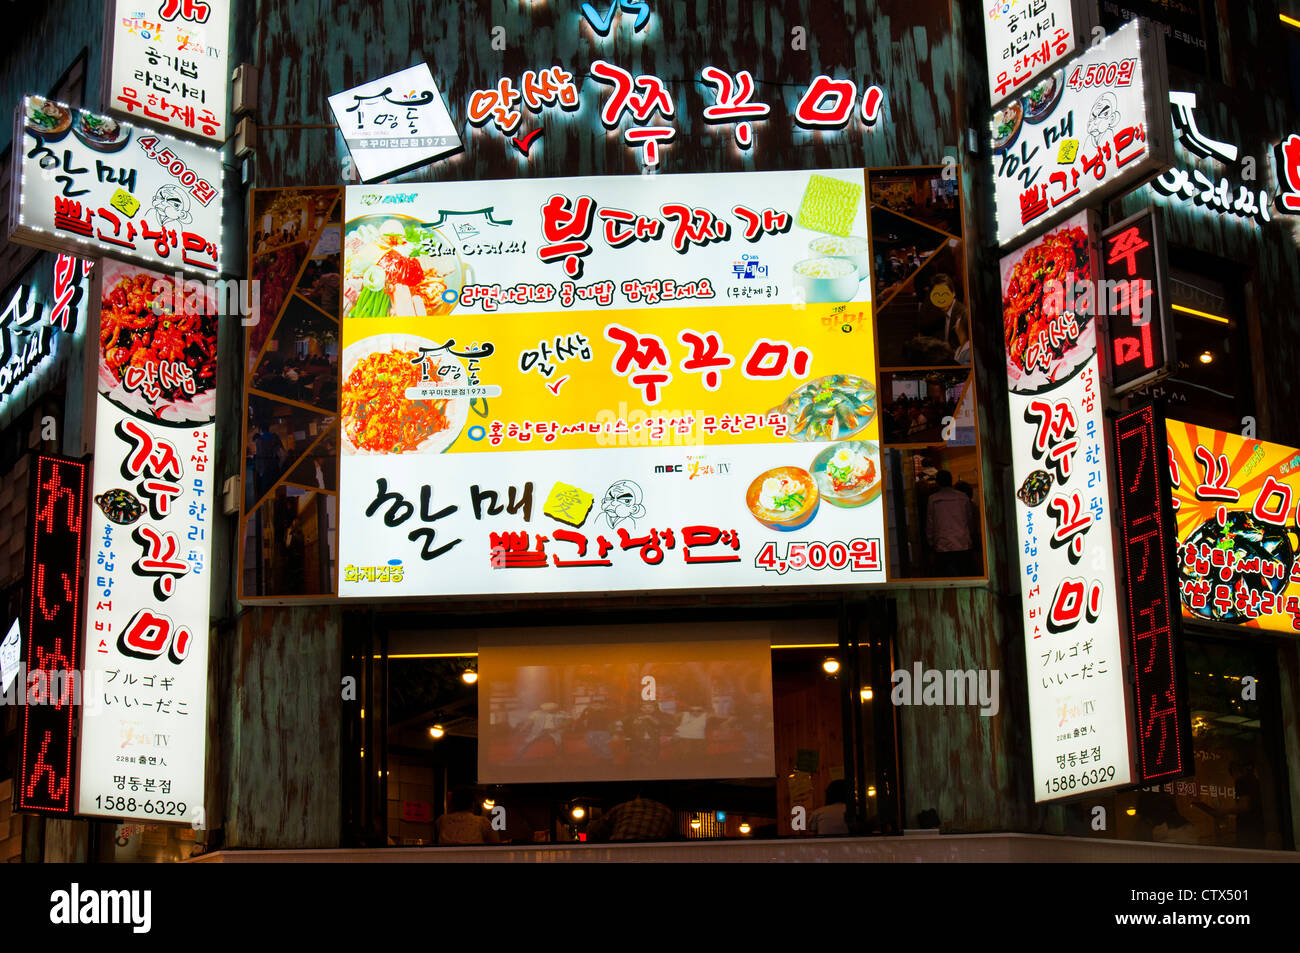 Chaotic display of restaurants signs at night, Myeongdong, Seoul, Korea Stock Photo